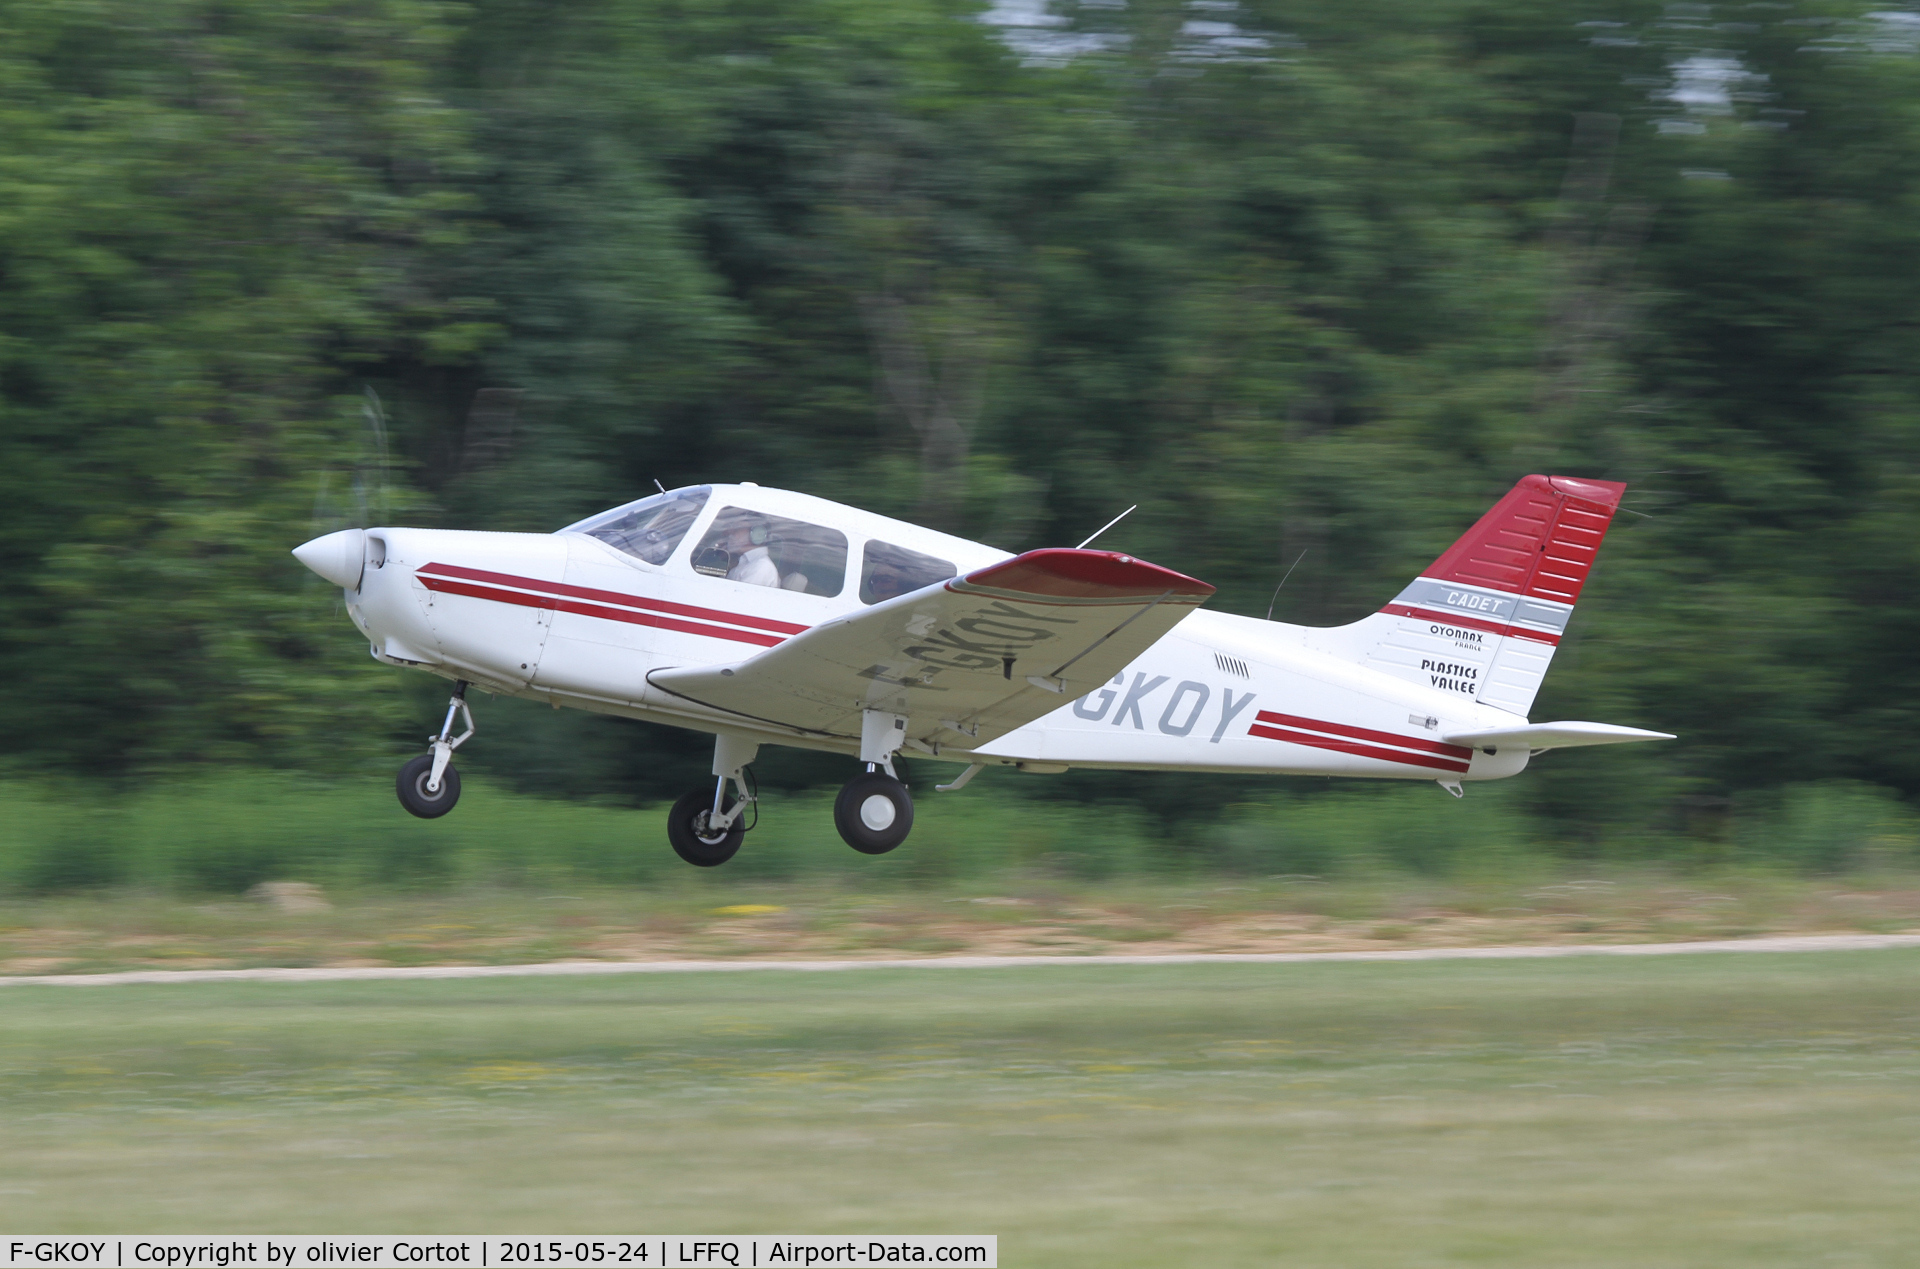 F-GKOY, Piper PA-28-161 Warrior II C/N 28-41334, taking off